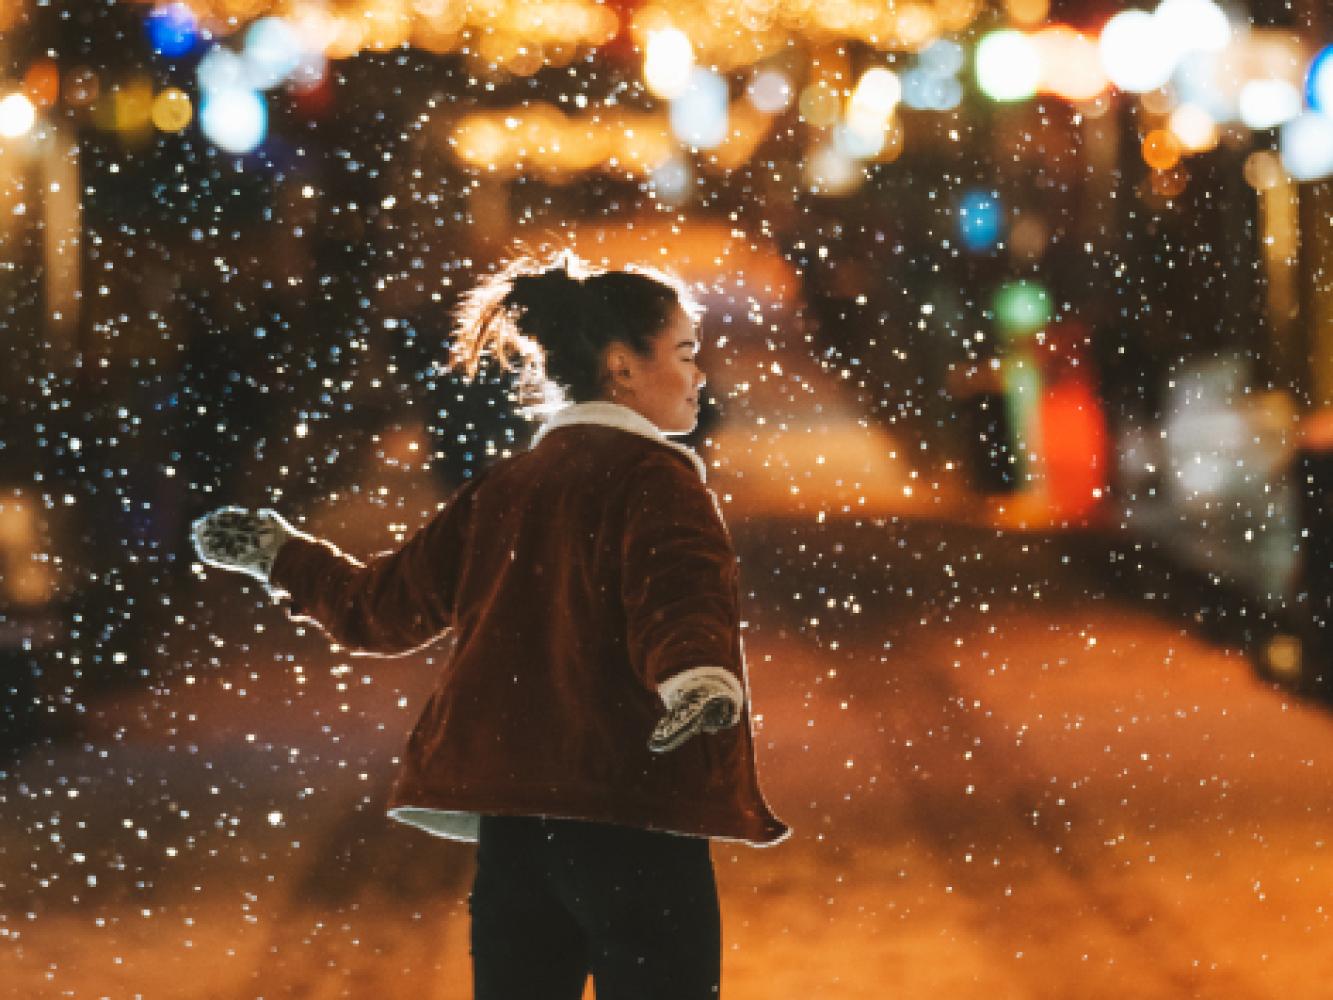 Girl enjoying snowing weather in Tromsø during Christmas